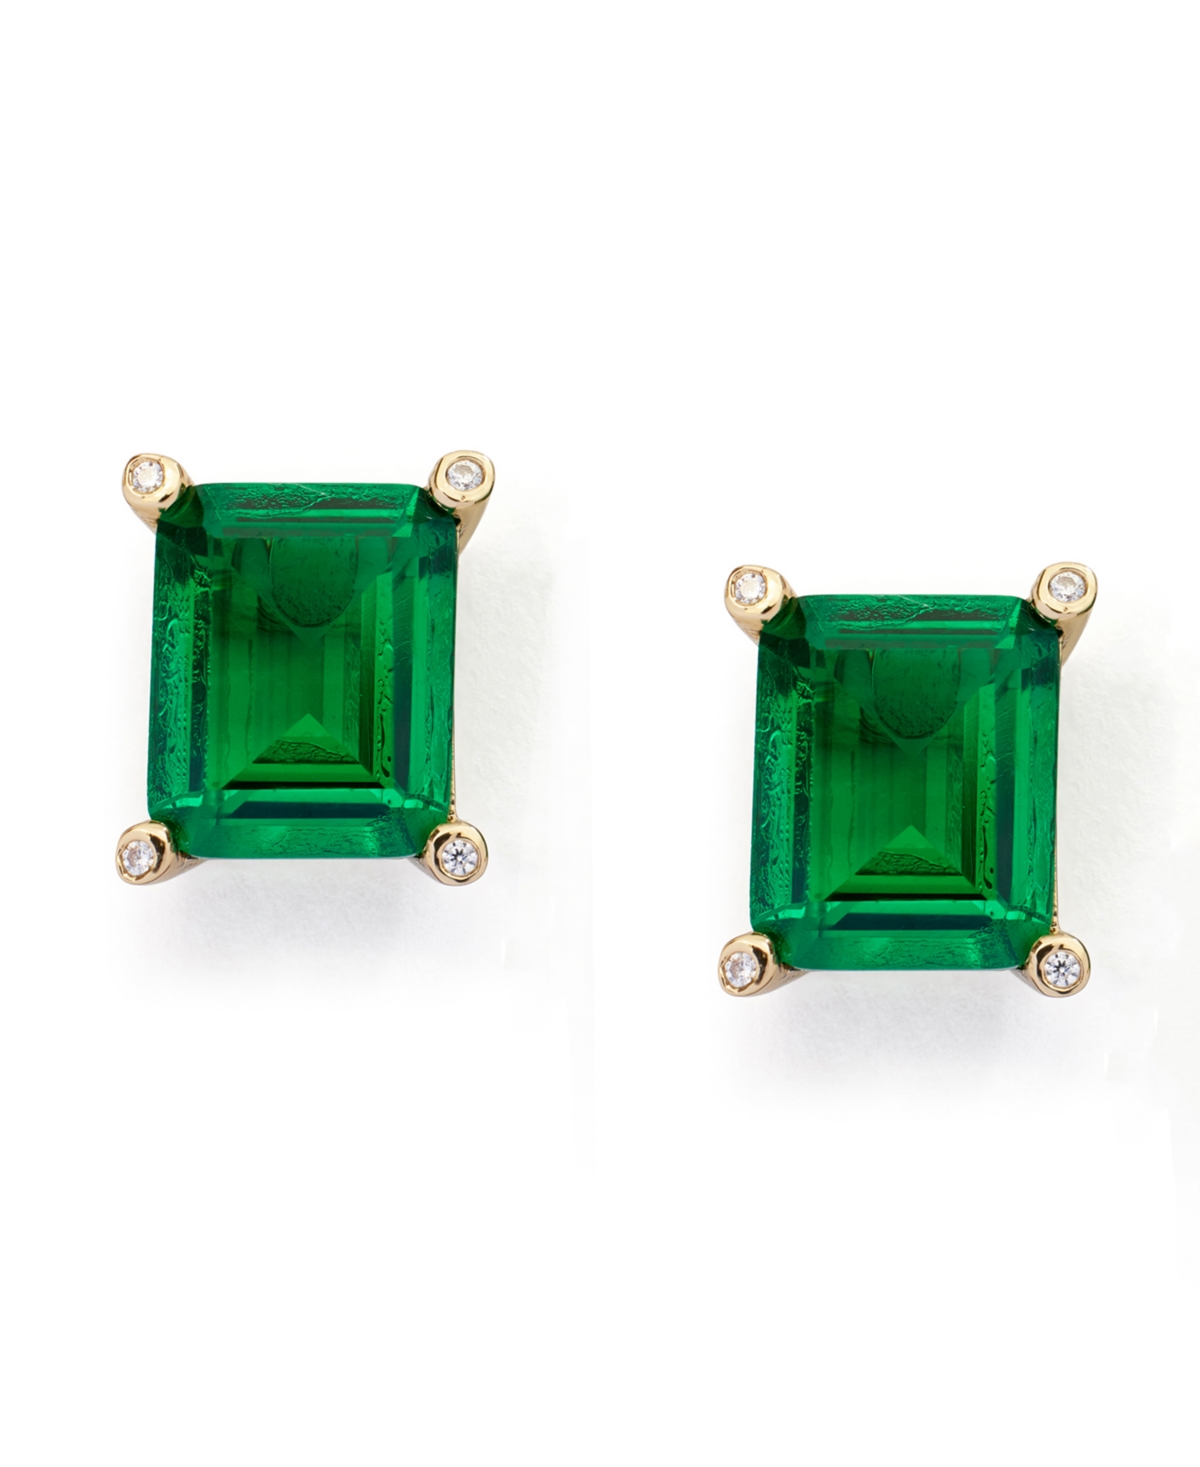 Cubic Zirconia Emerald Cut Stud Earrings - Green, Gold